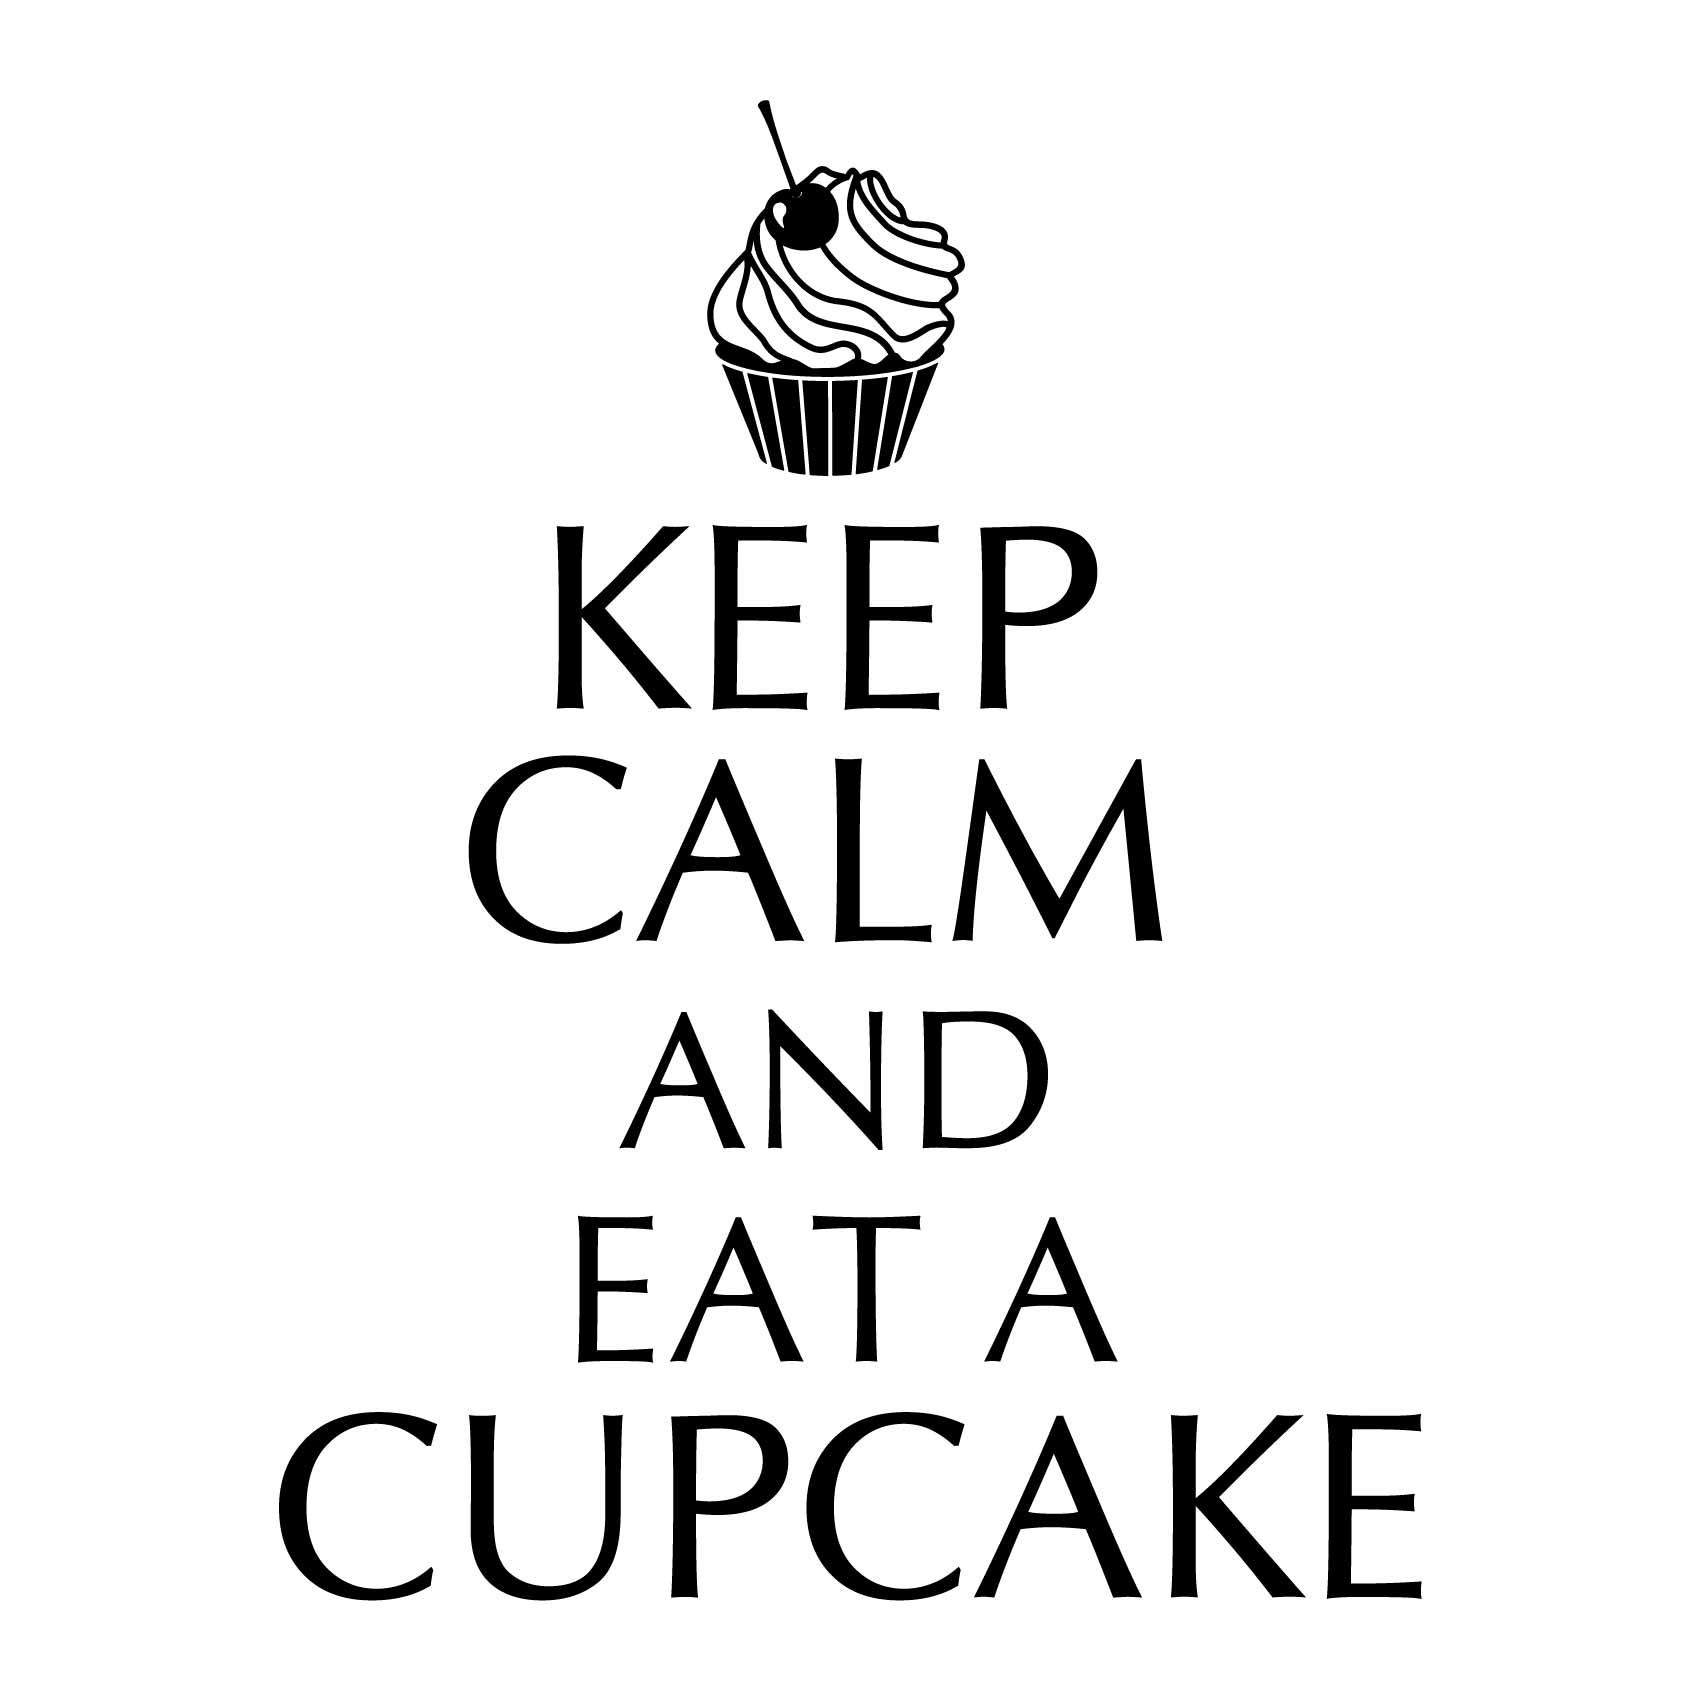 stickers-keep-calm-eat-a-cupcake-ref14cupcake-autocollant-muraux-cuisine-salle-a-manger-salon-sticker-mural-deco-gateau-cupcakes-gateaux-(2)